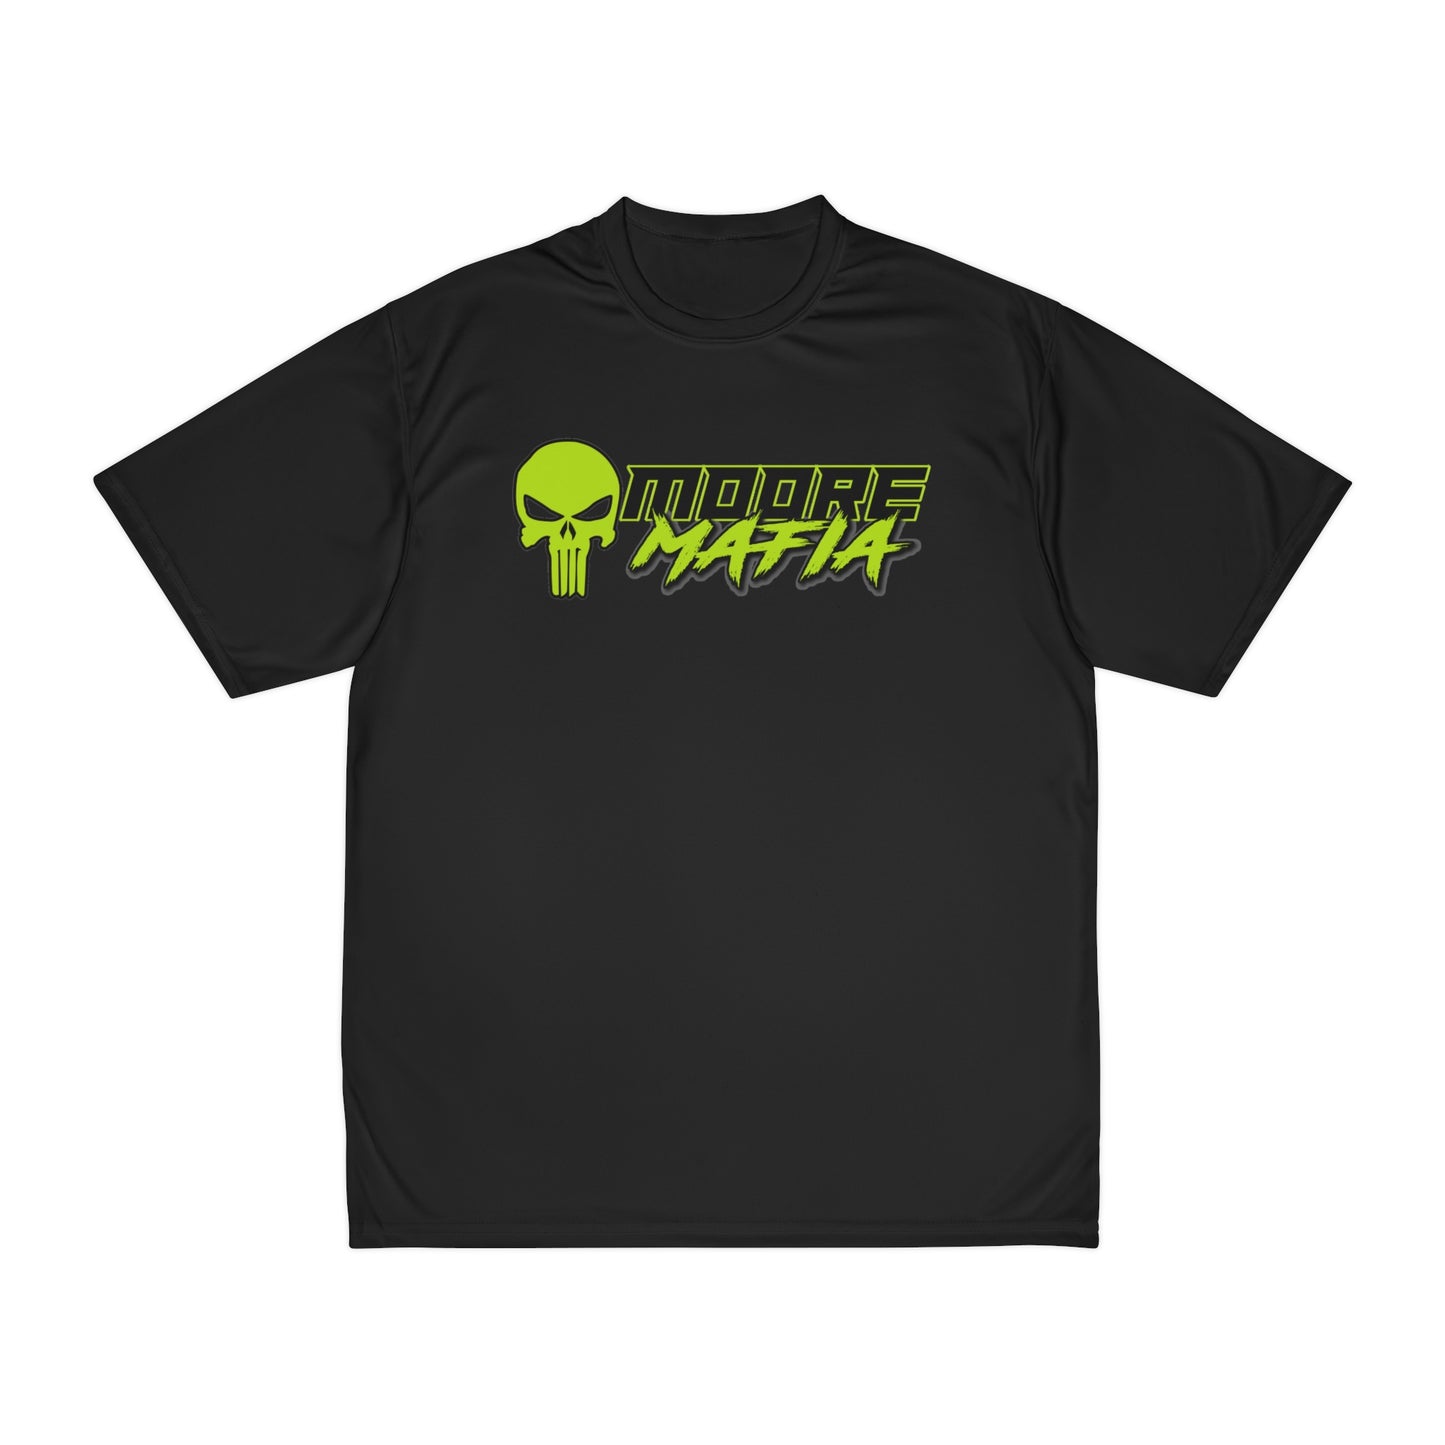 Moore Mafia Performance T-Shirt